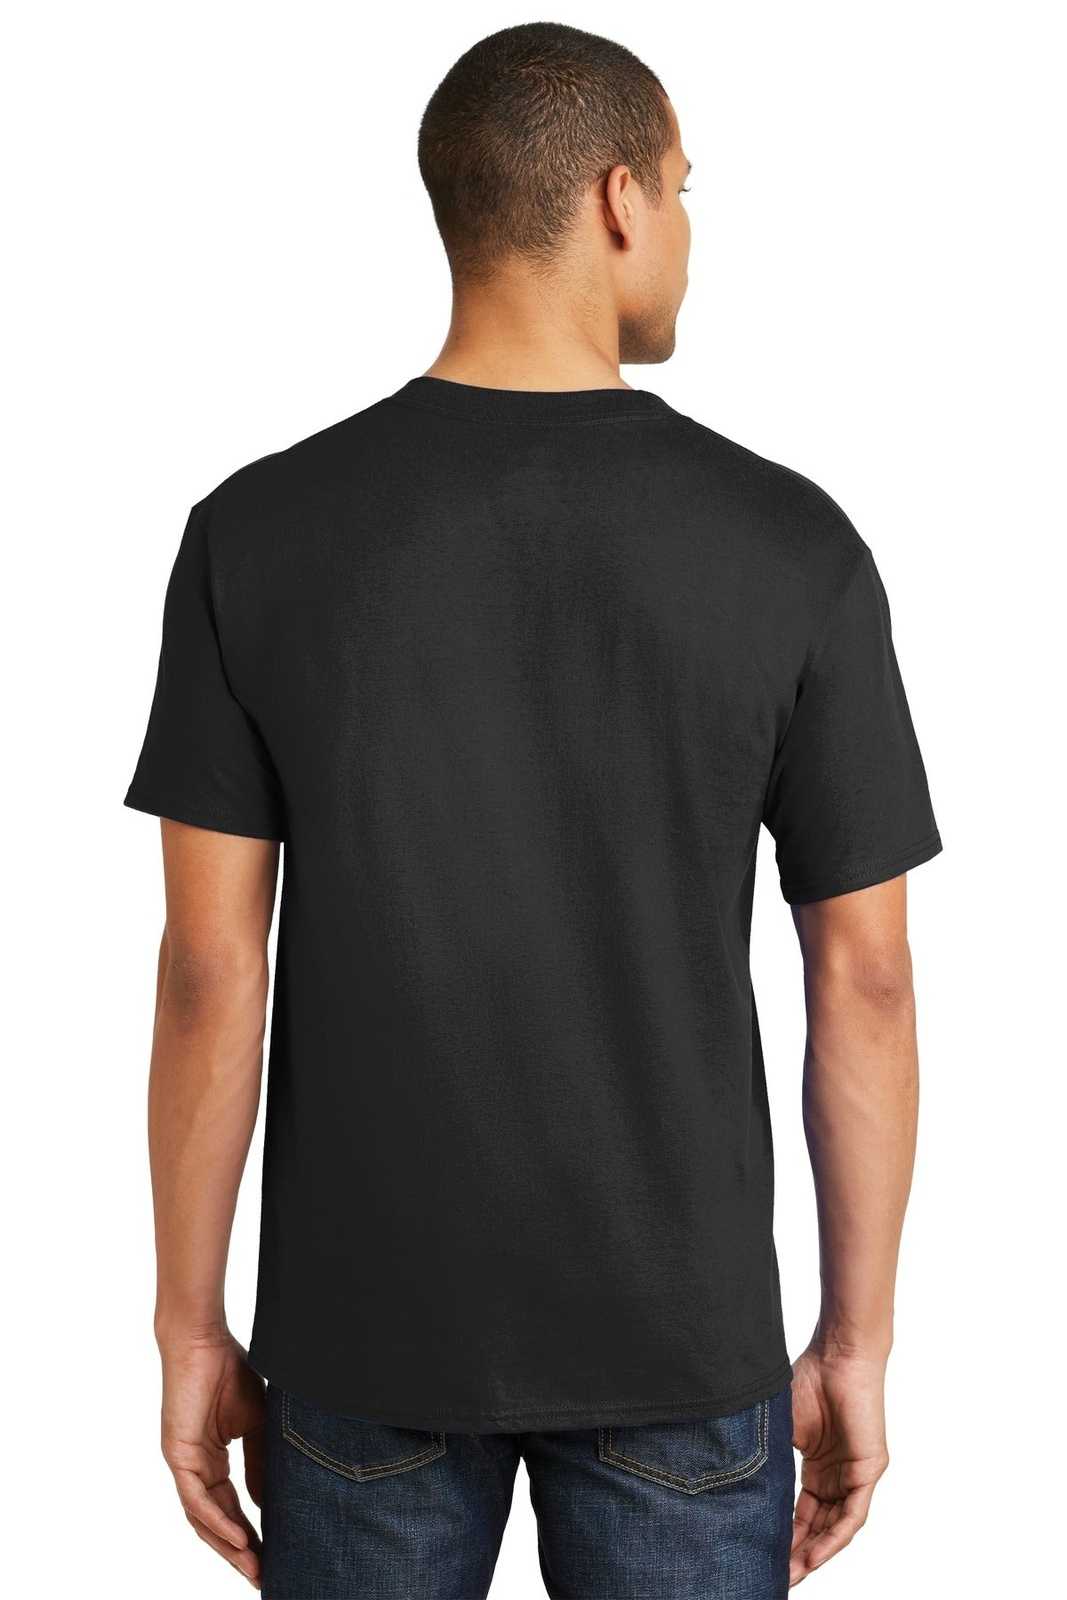 Hanes 5180 Beefy-T 100% Cotton T-Shirt - Black - HIT a Double